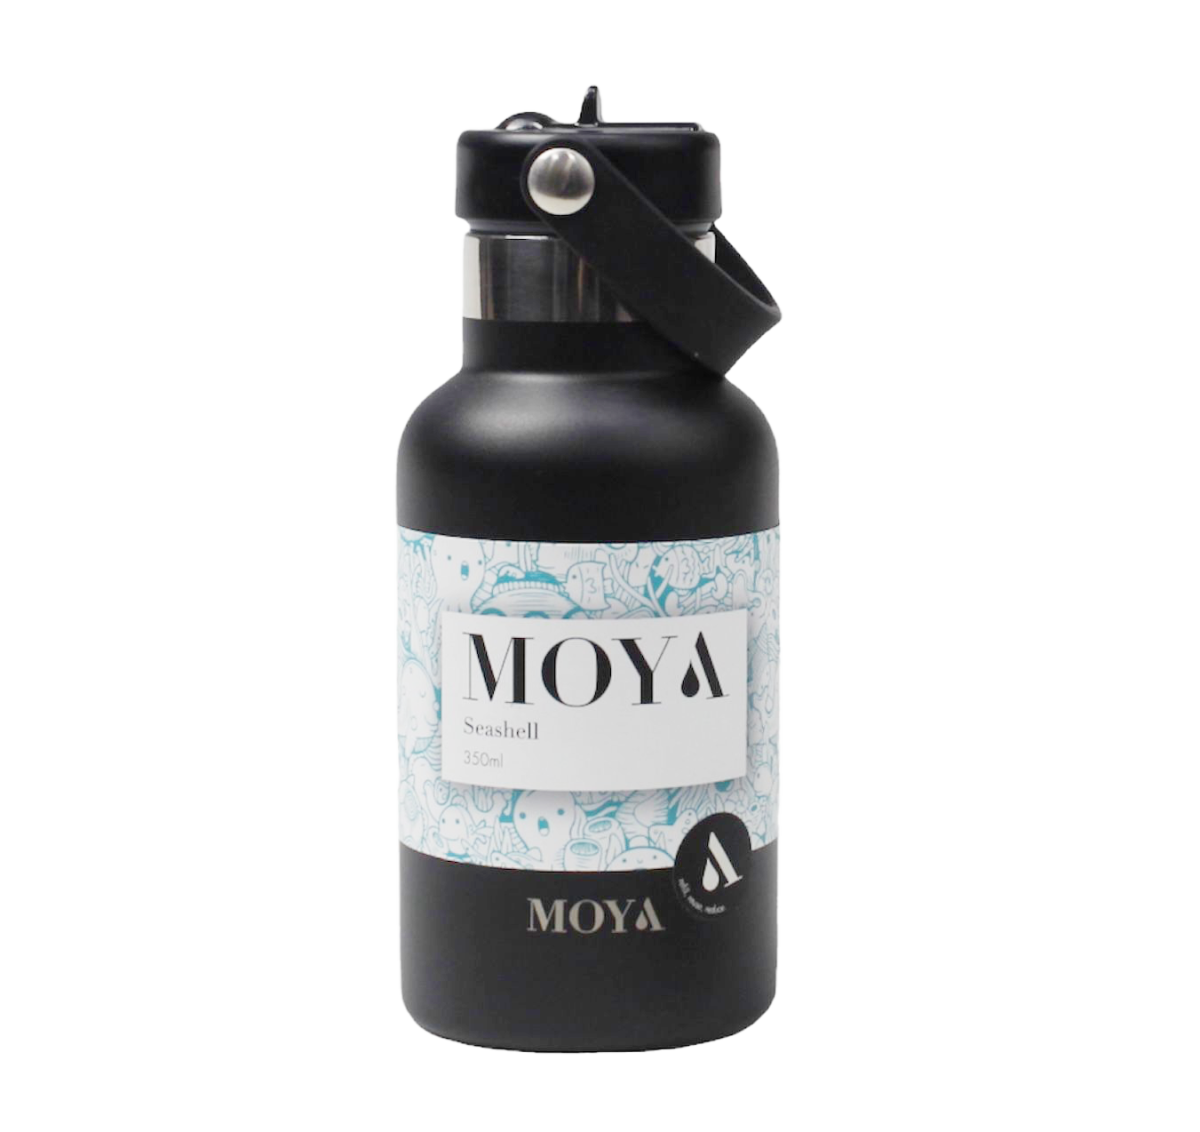 Moya "Seashell" 350ml Insulated Sustainable Water Bottle Black